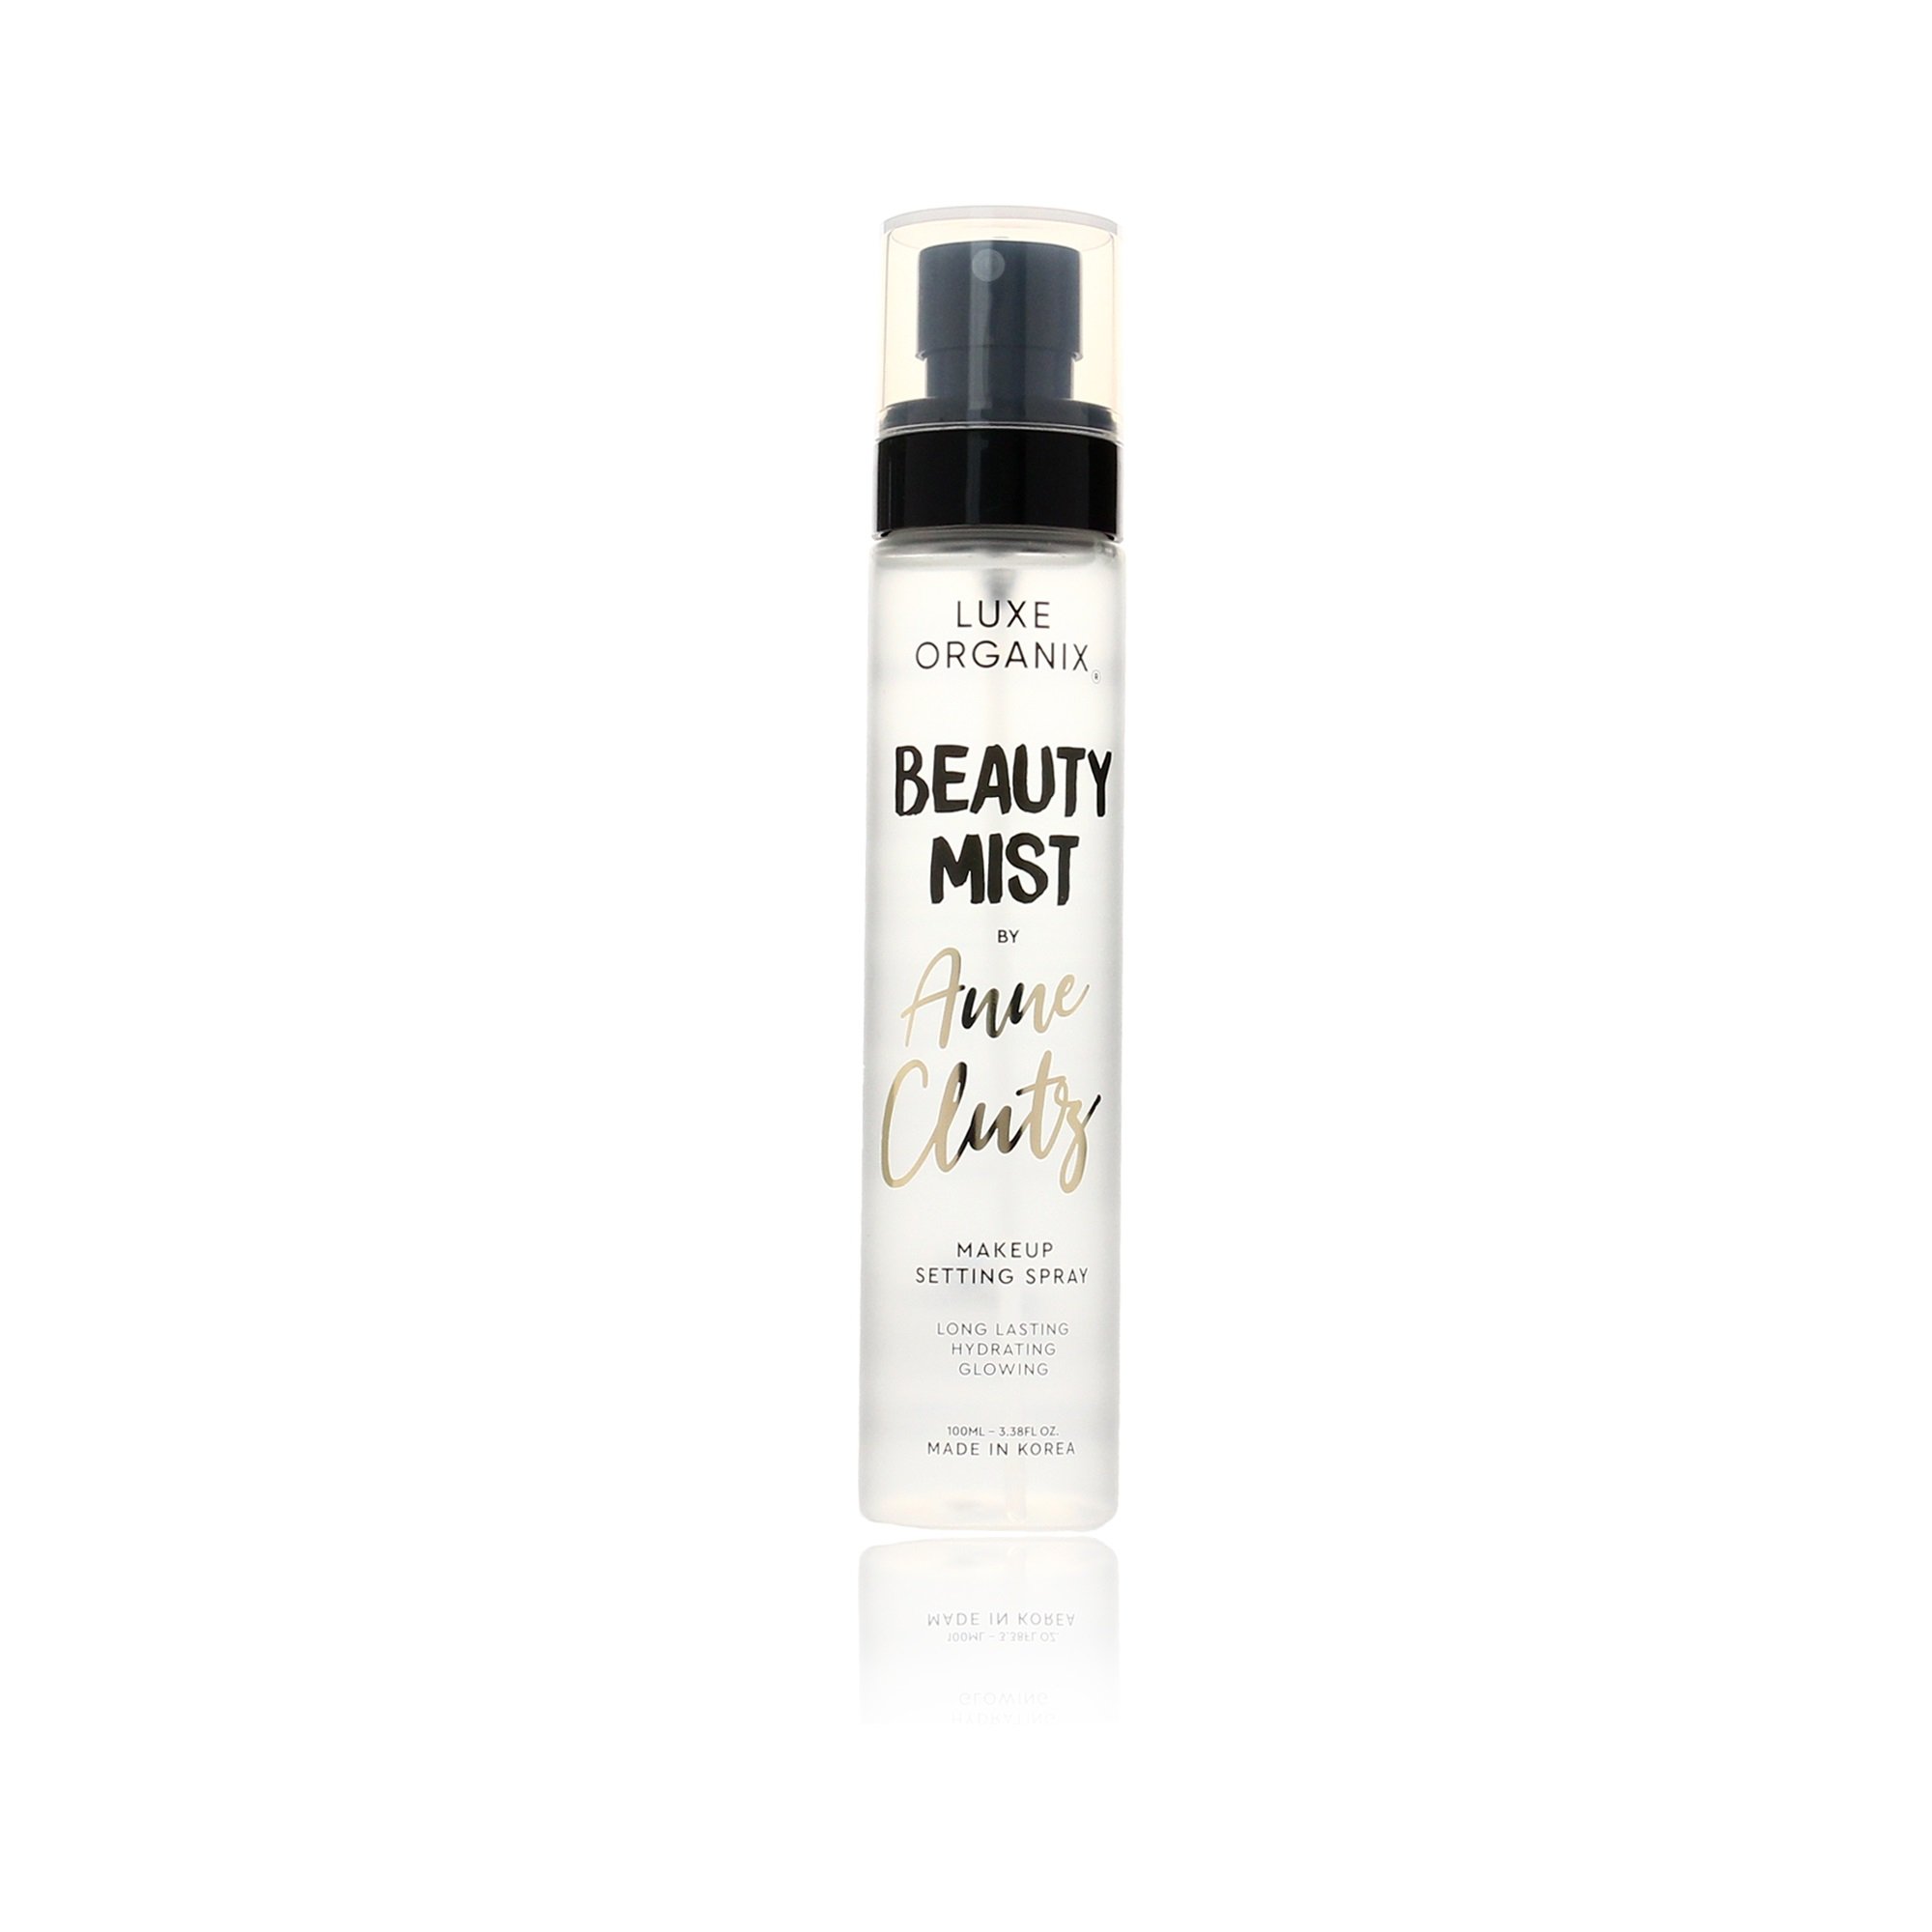 Luxe Organix Beauty Mist by Anne Clutz Makeup Setting Spray